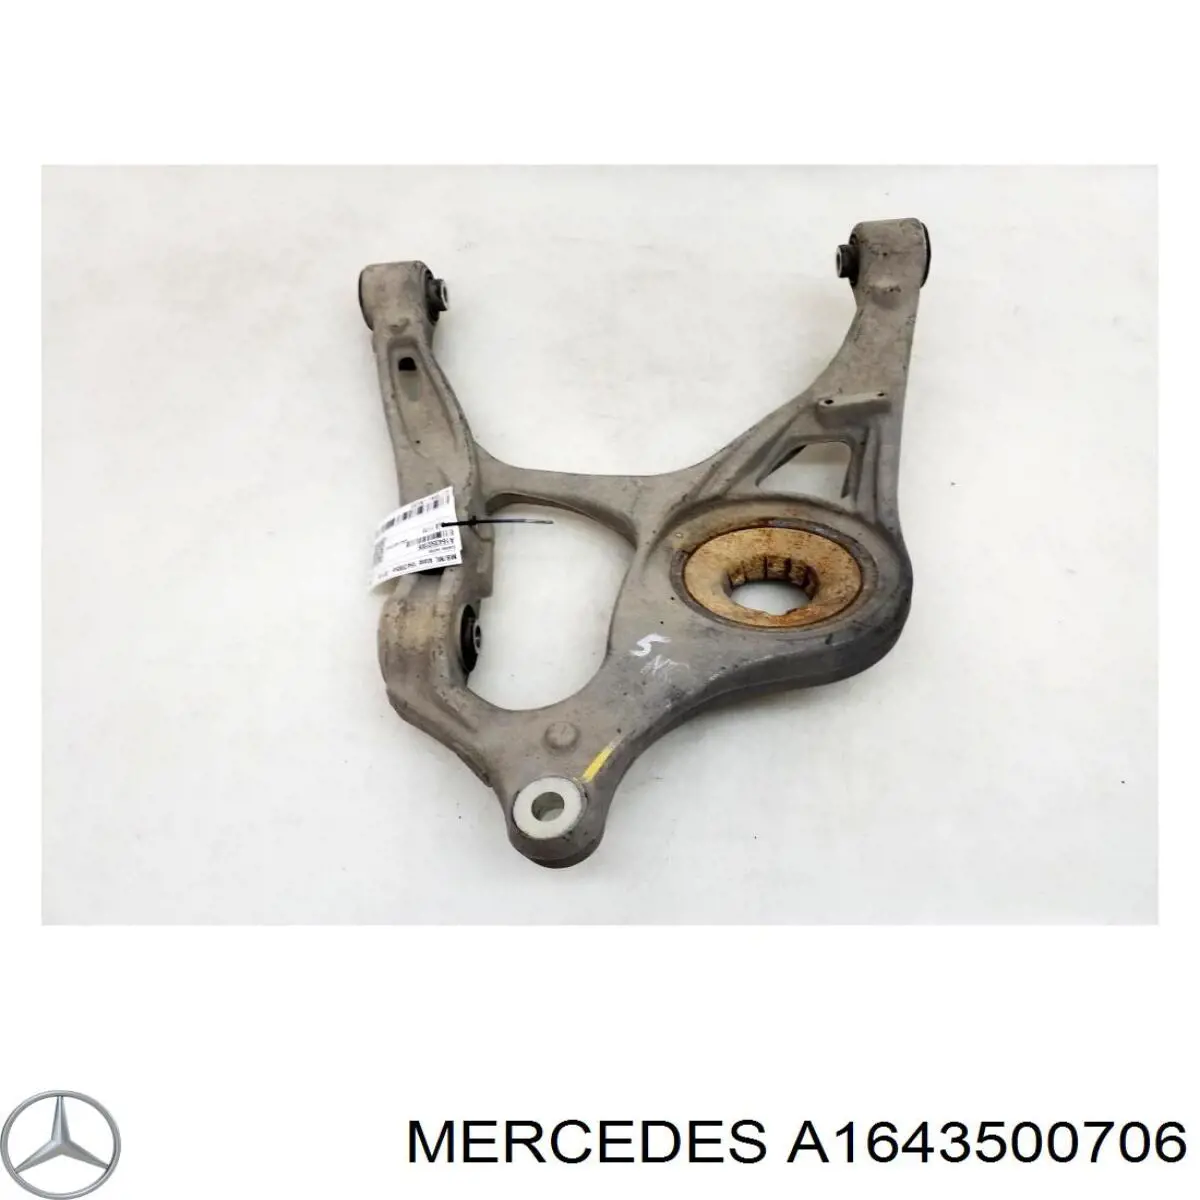 Brazo suspension (control) trasero inferior derecho para Mercedes GL (X164)